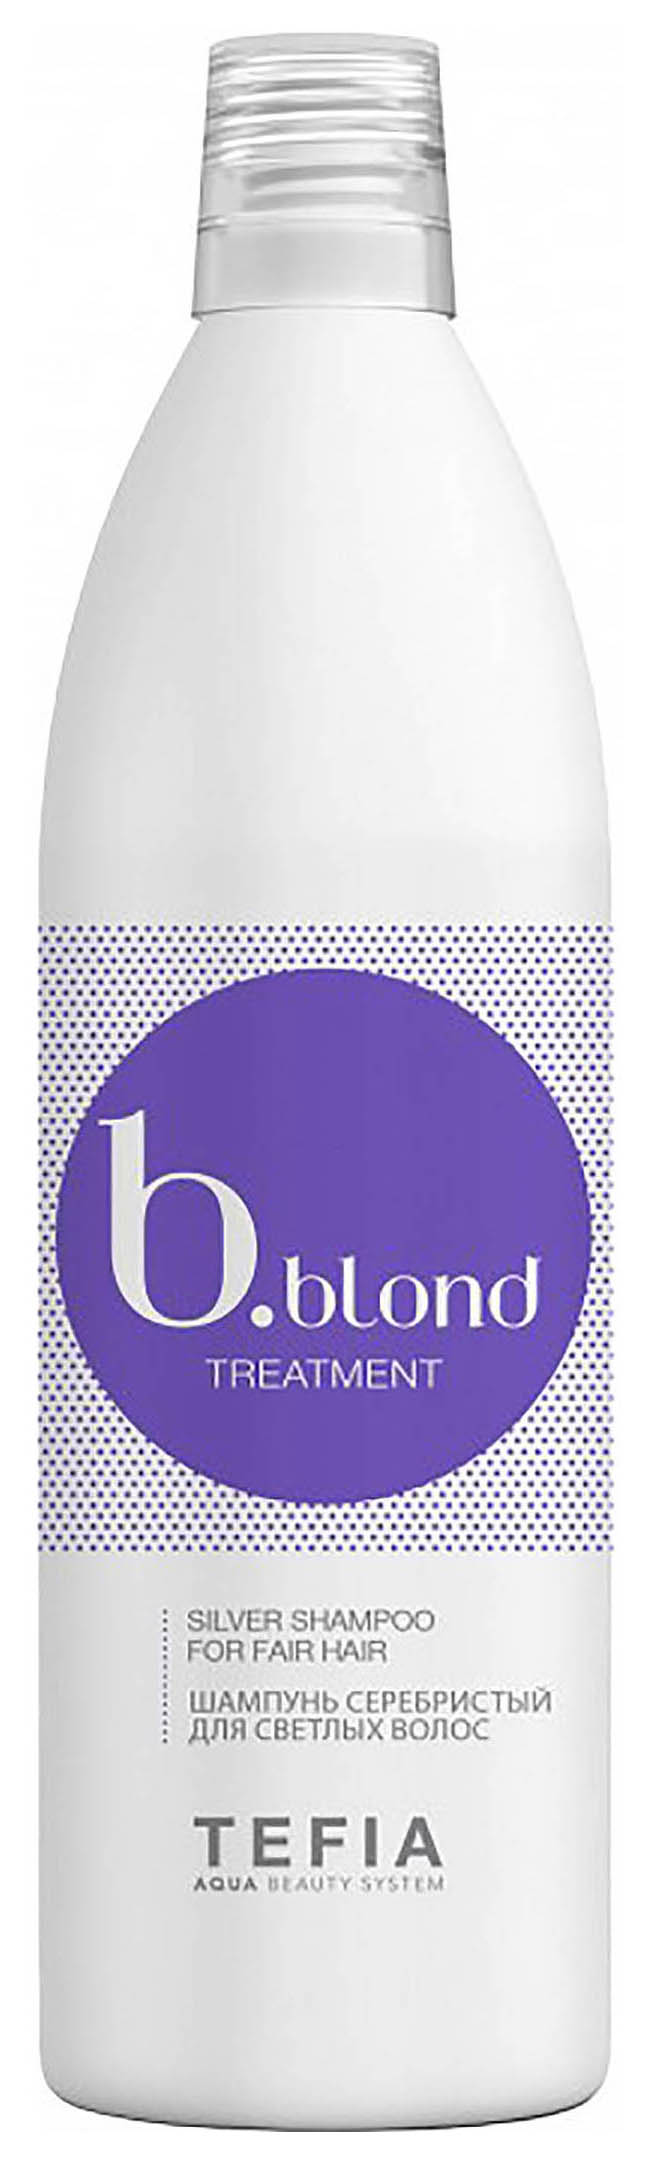 Шампунь для светлых волос серебристый Tefia Bblond Treatment Shampoo 250 мл